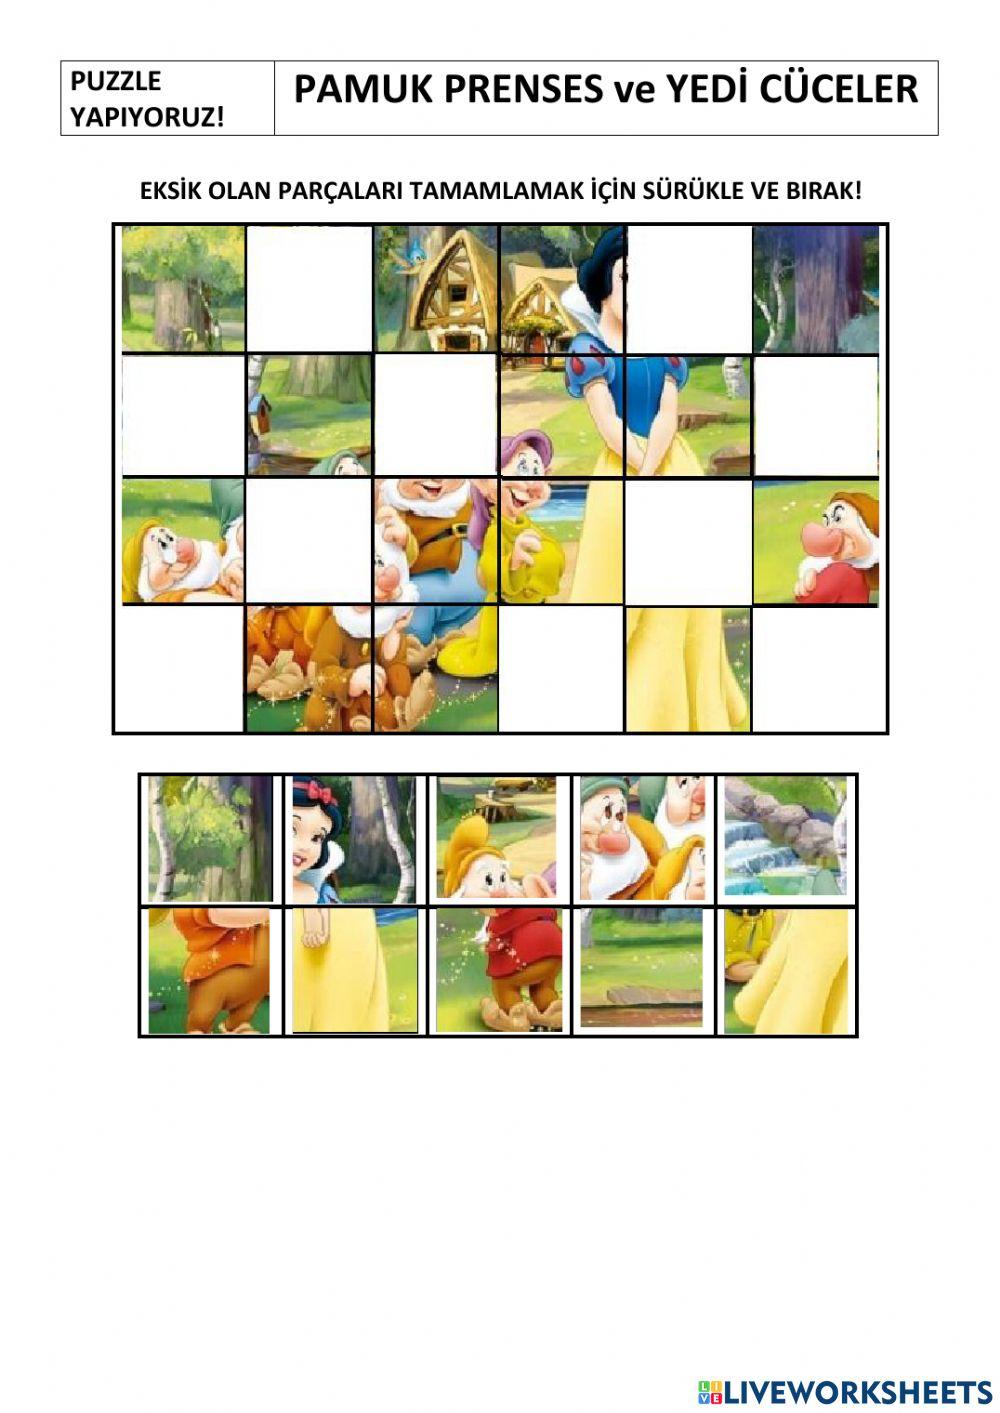 Pamuk prenses ve 7 cüceler puzzle